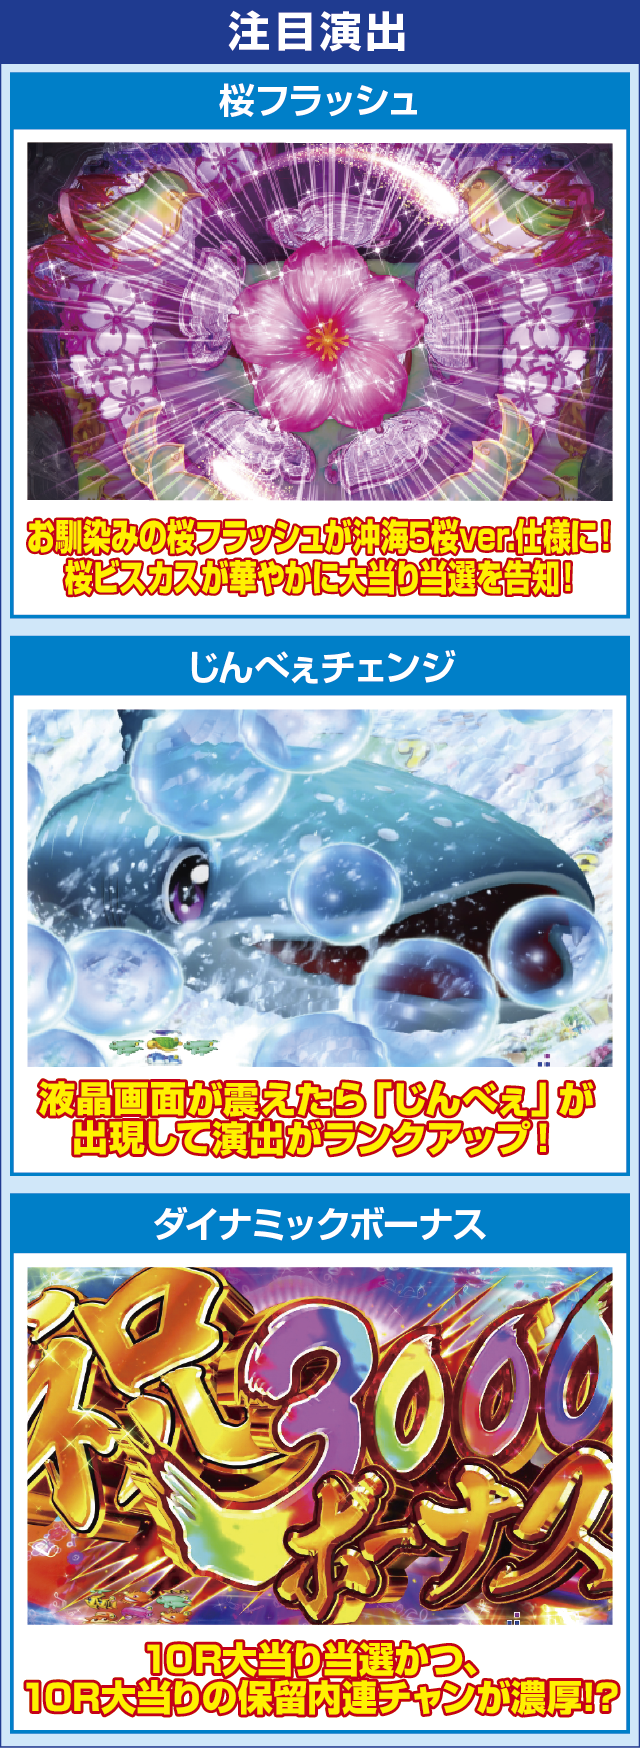 Pスーパー海物語 IN 沖縄5 桜ver.319のピックアップポイント